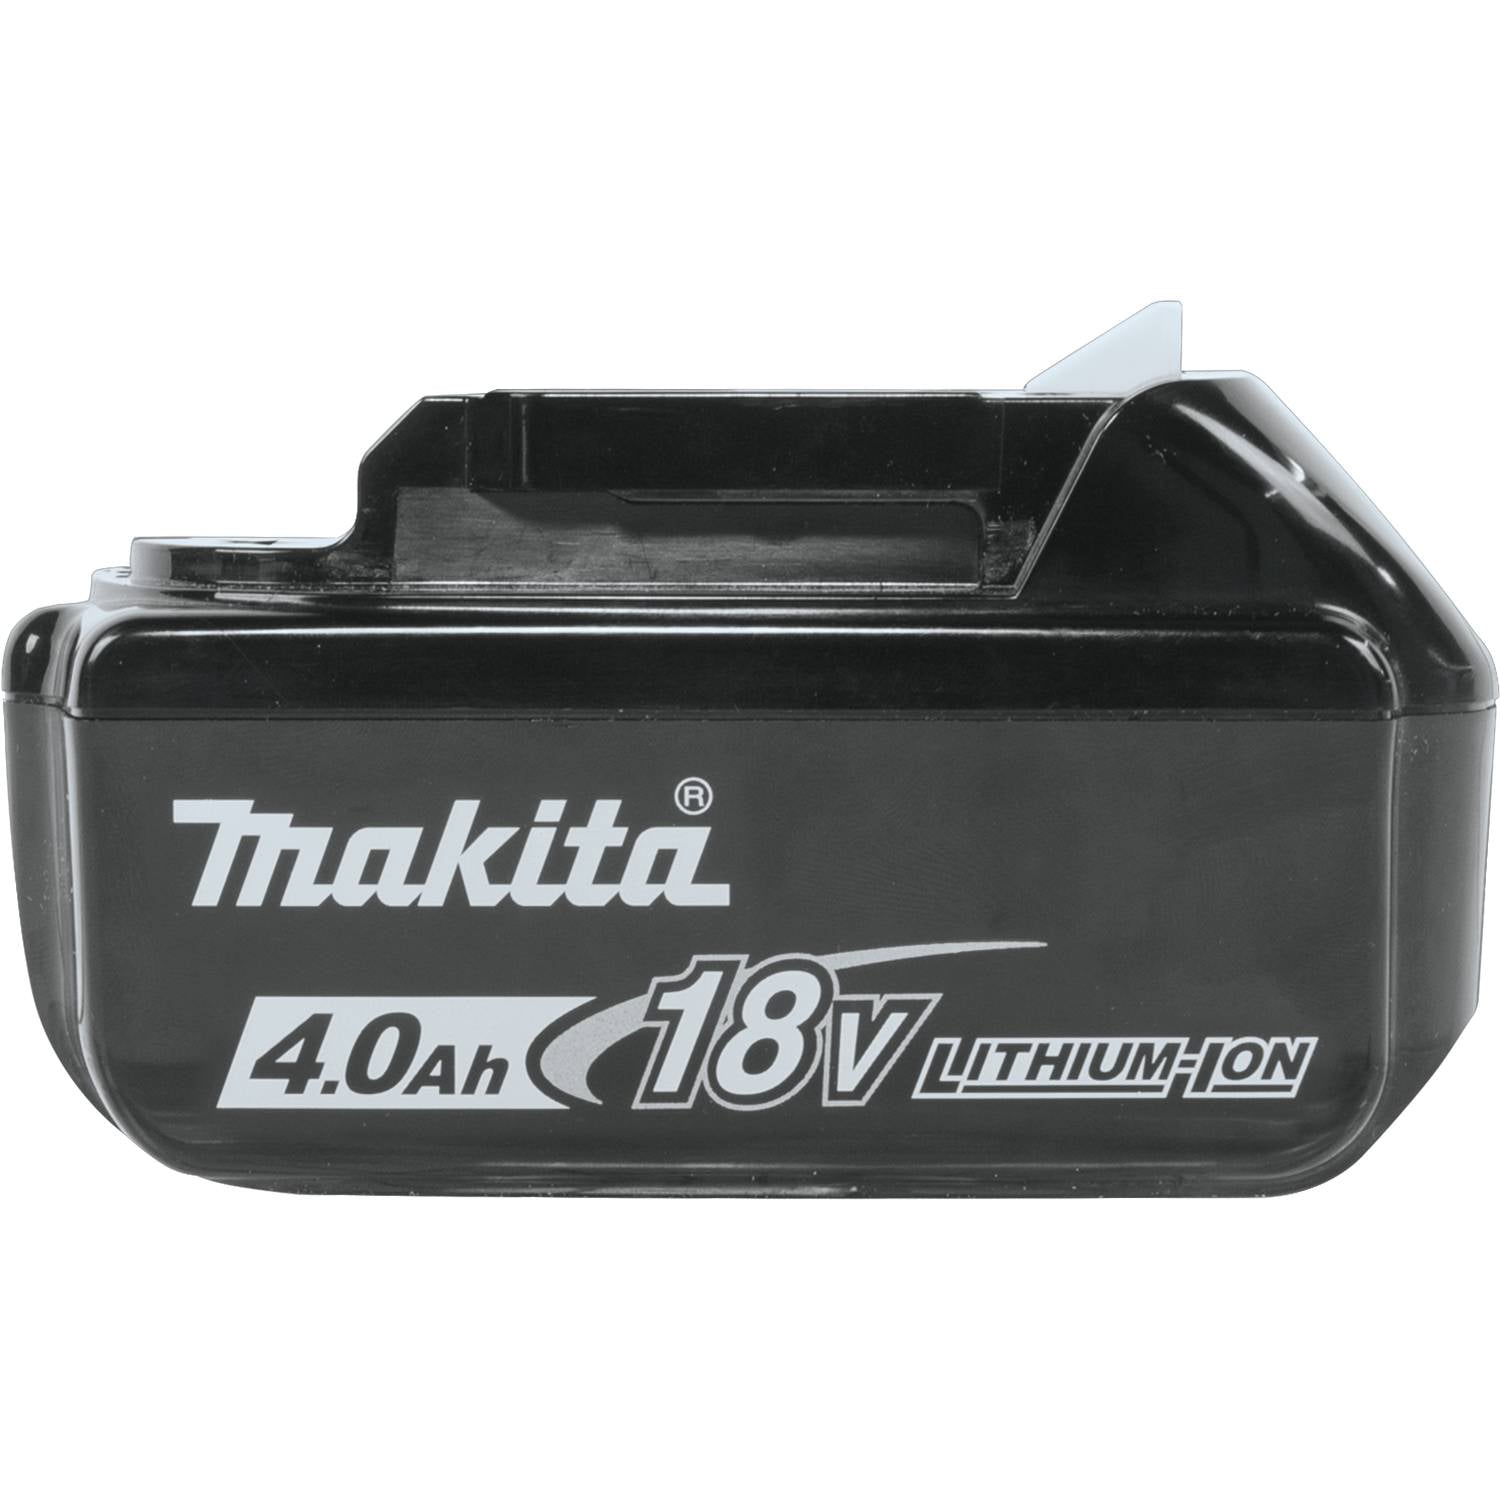 Makita ADBL1840B Outdoor Adventure™ 18V LXT Lithium-Ion 4.0Ah Battery